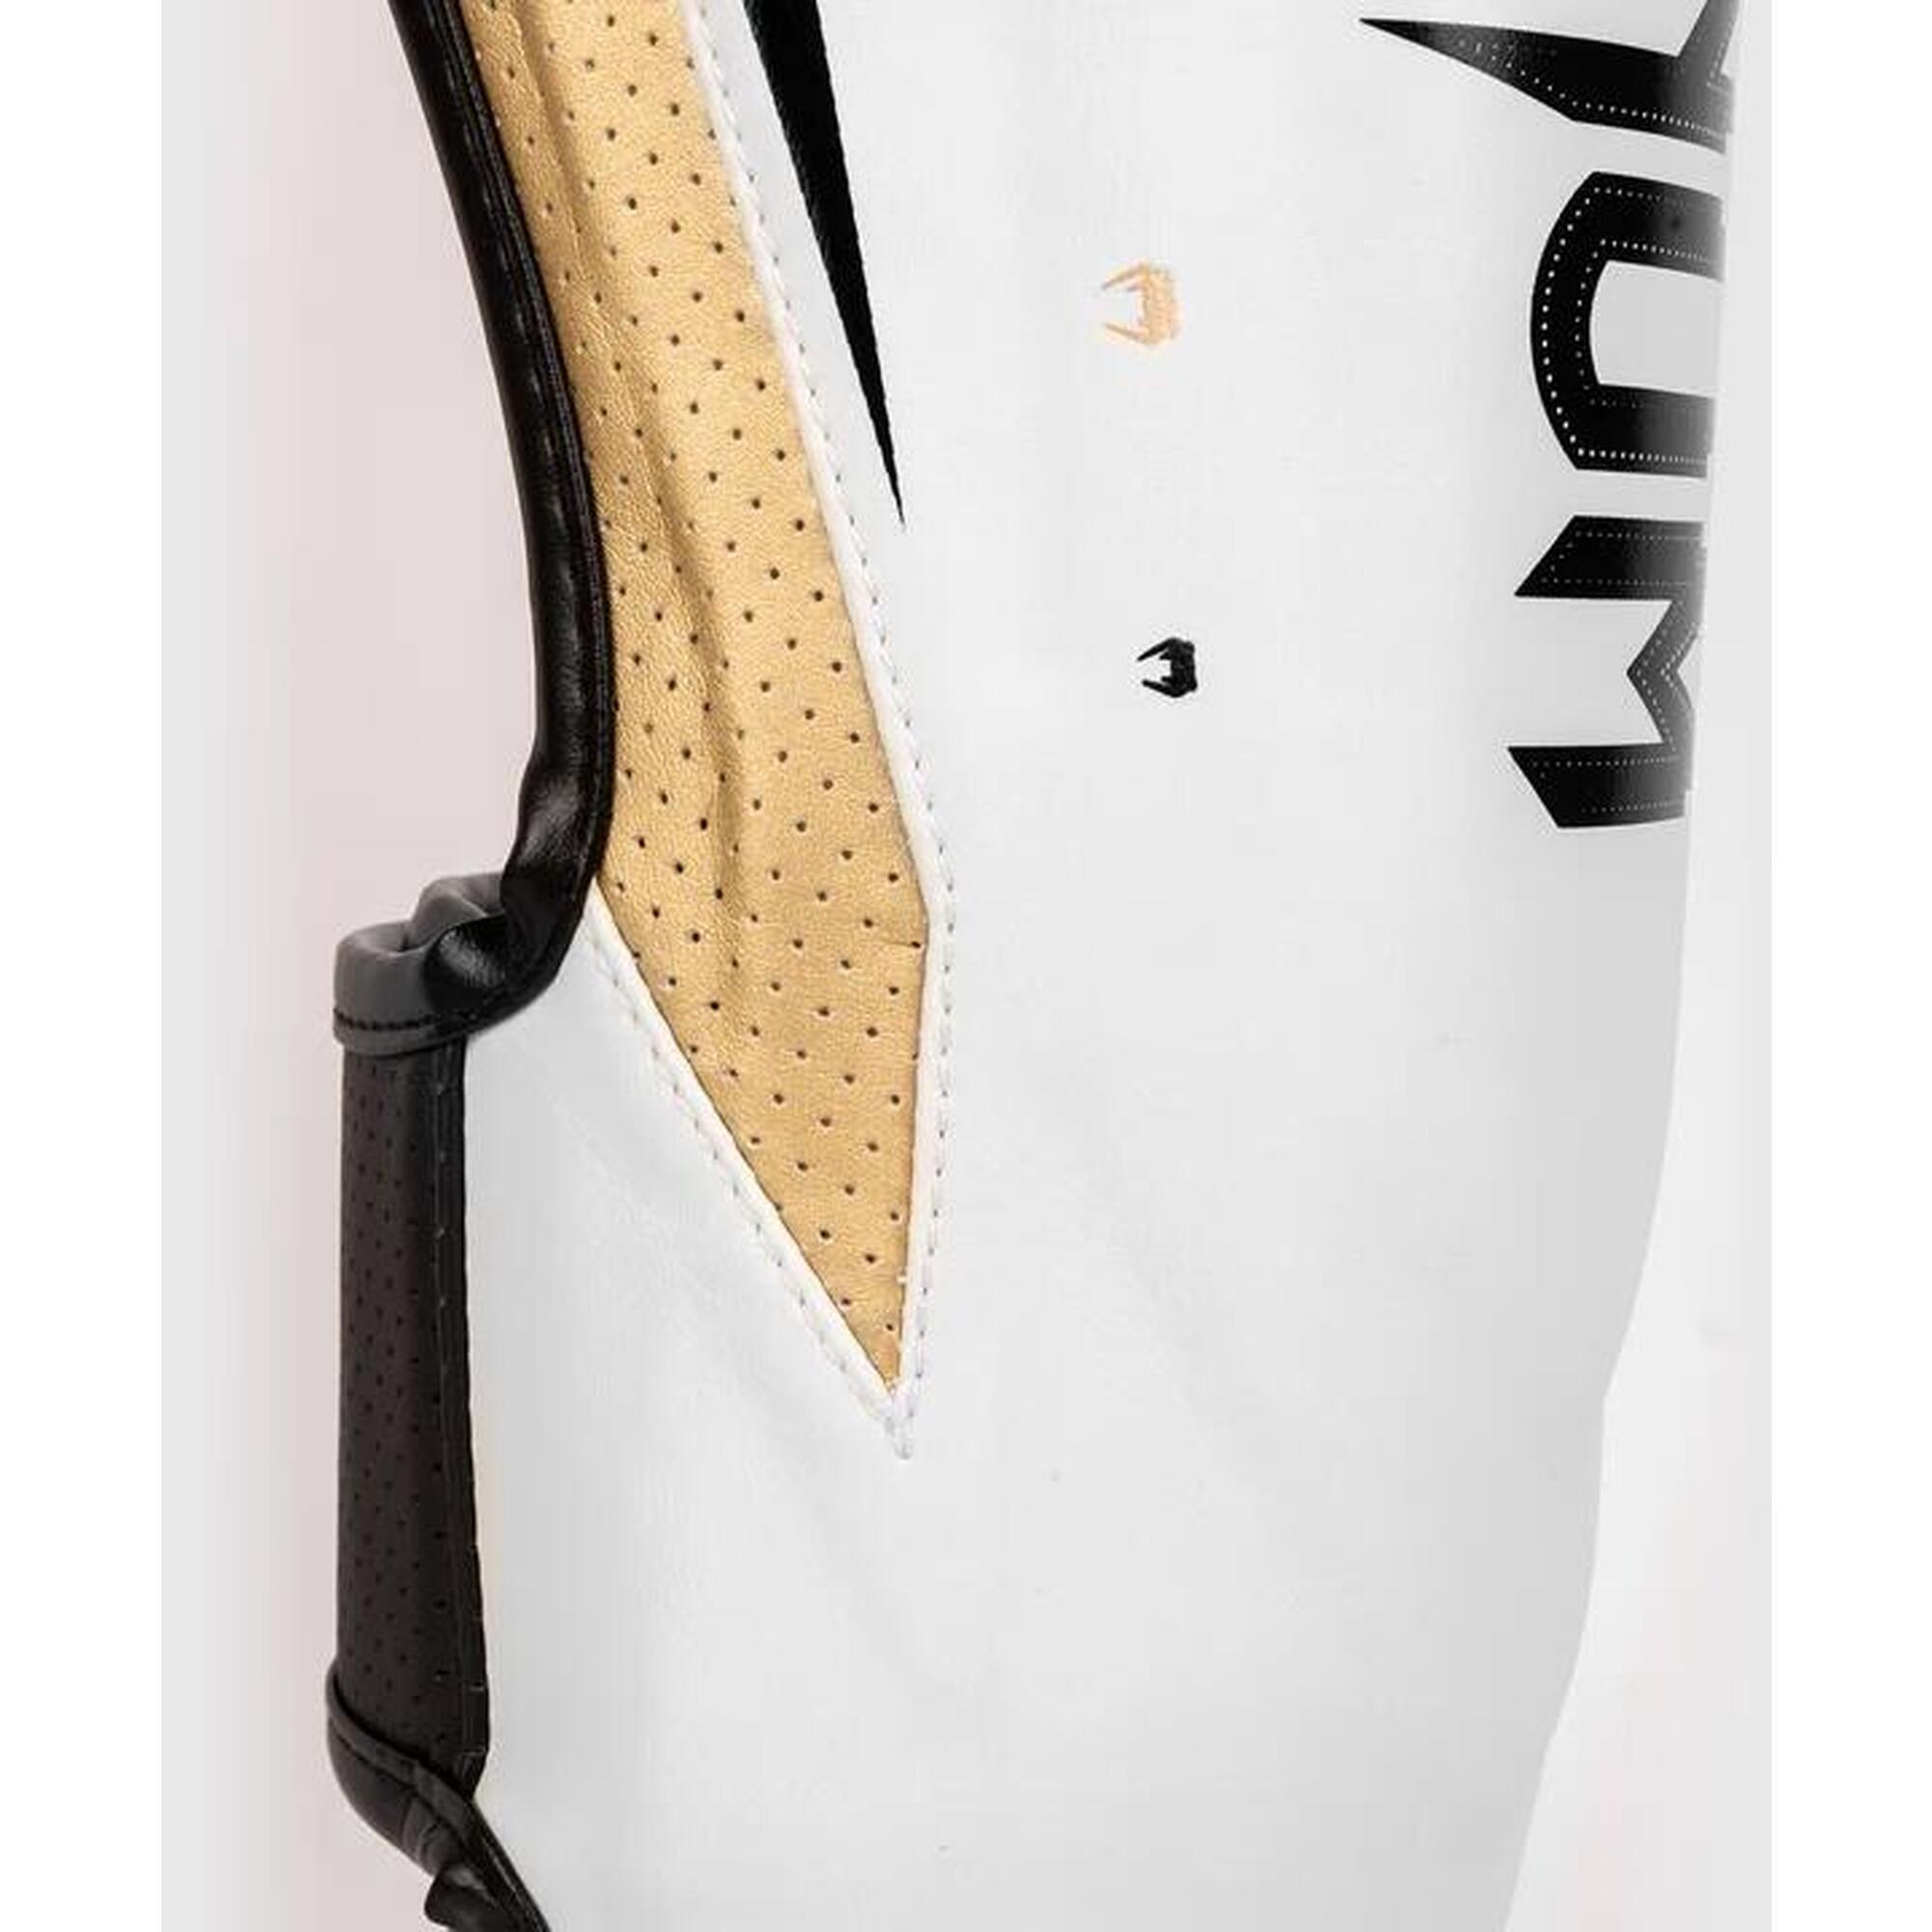 Elite Evo 護腿板 - 白色/金色